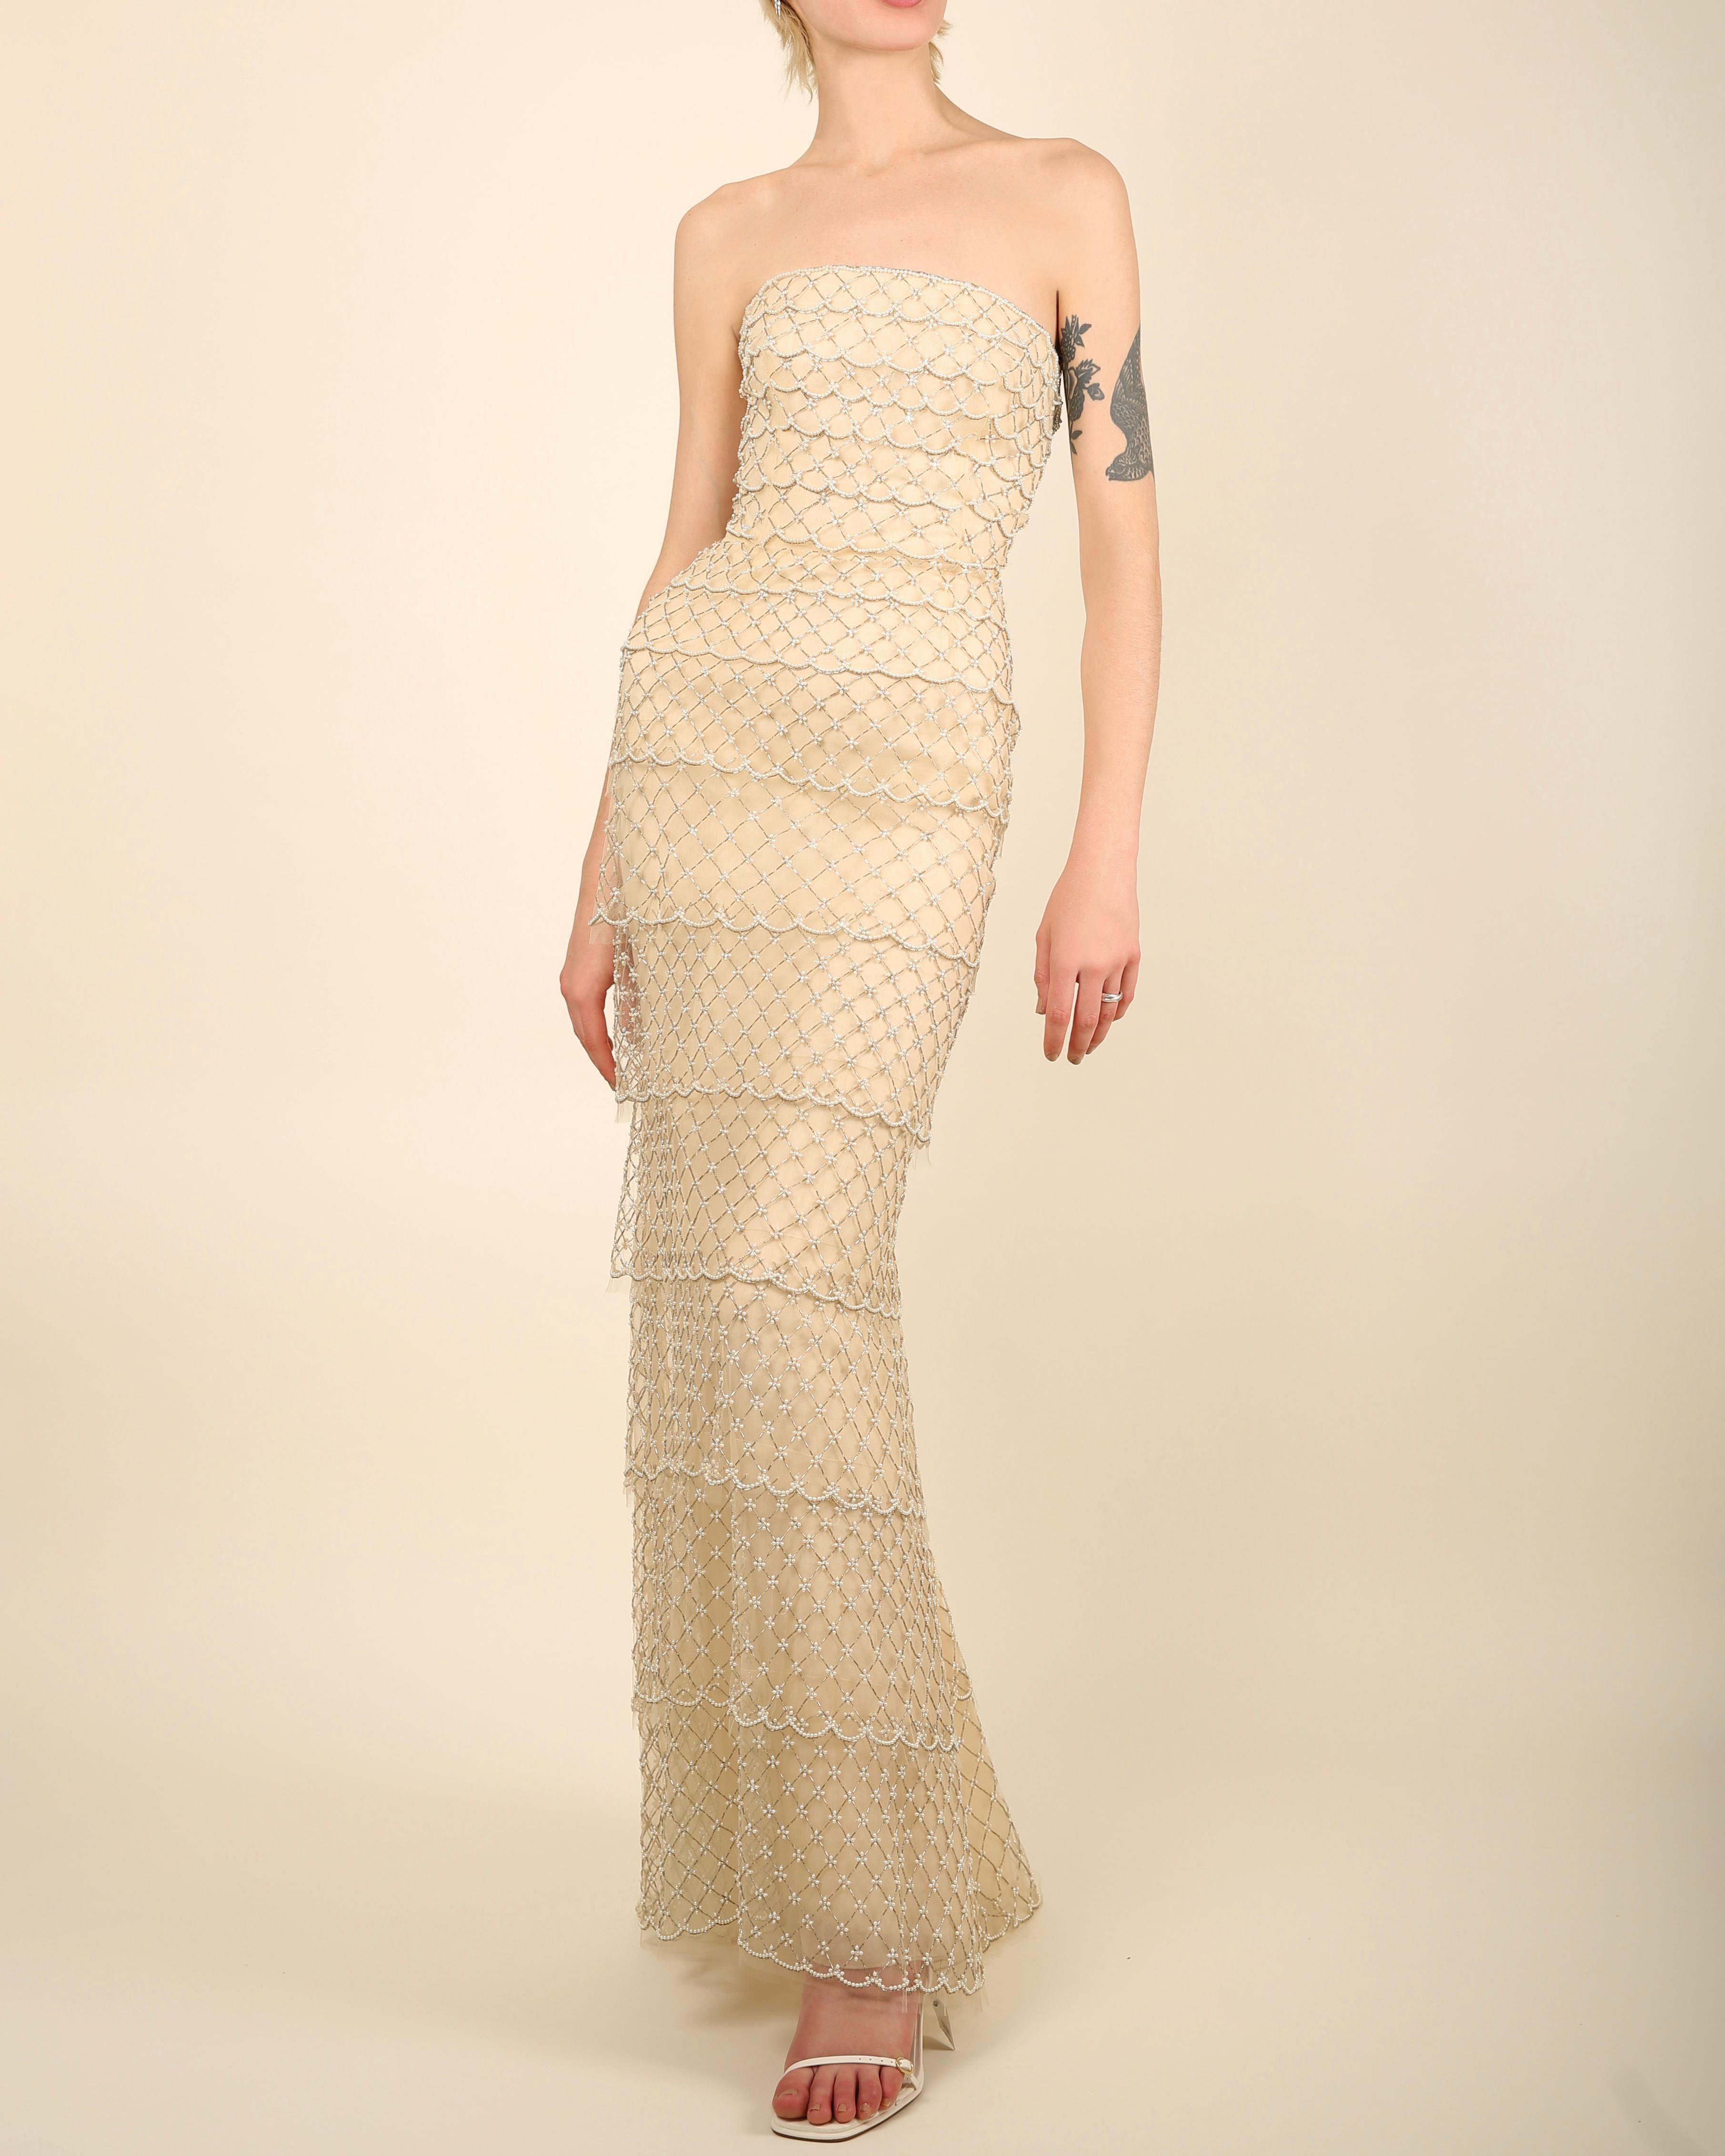 Oscar de la Renta S/S 2014 strapless tiered sheer mesh pearl wedding dress gown For Sale 1